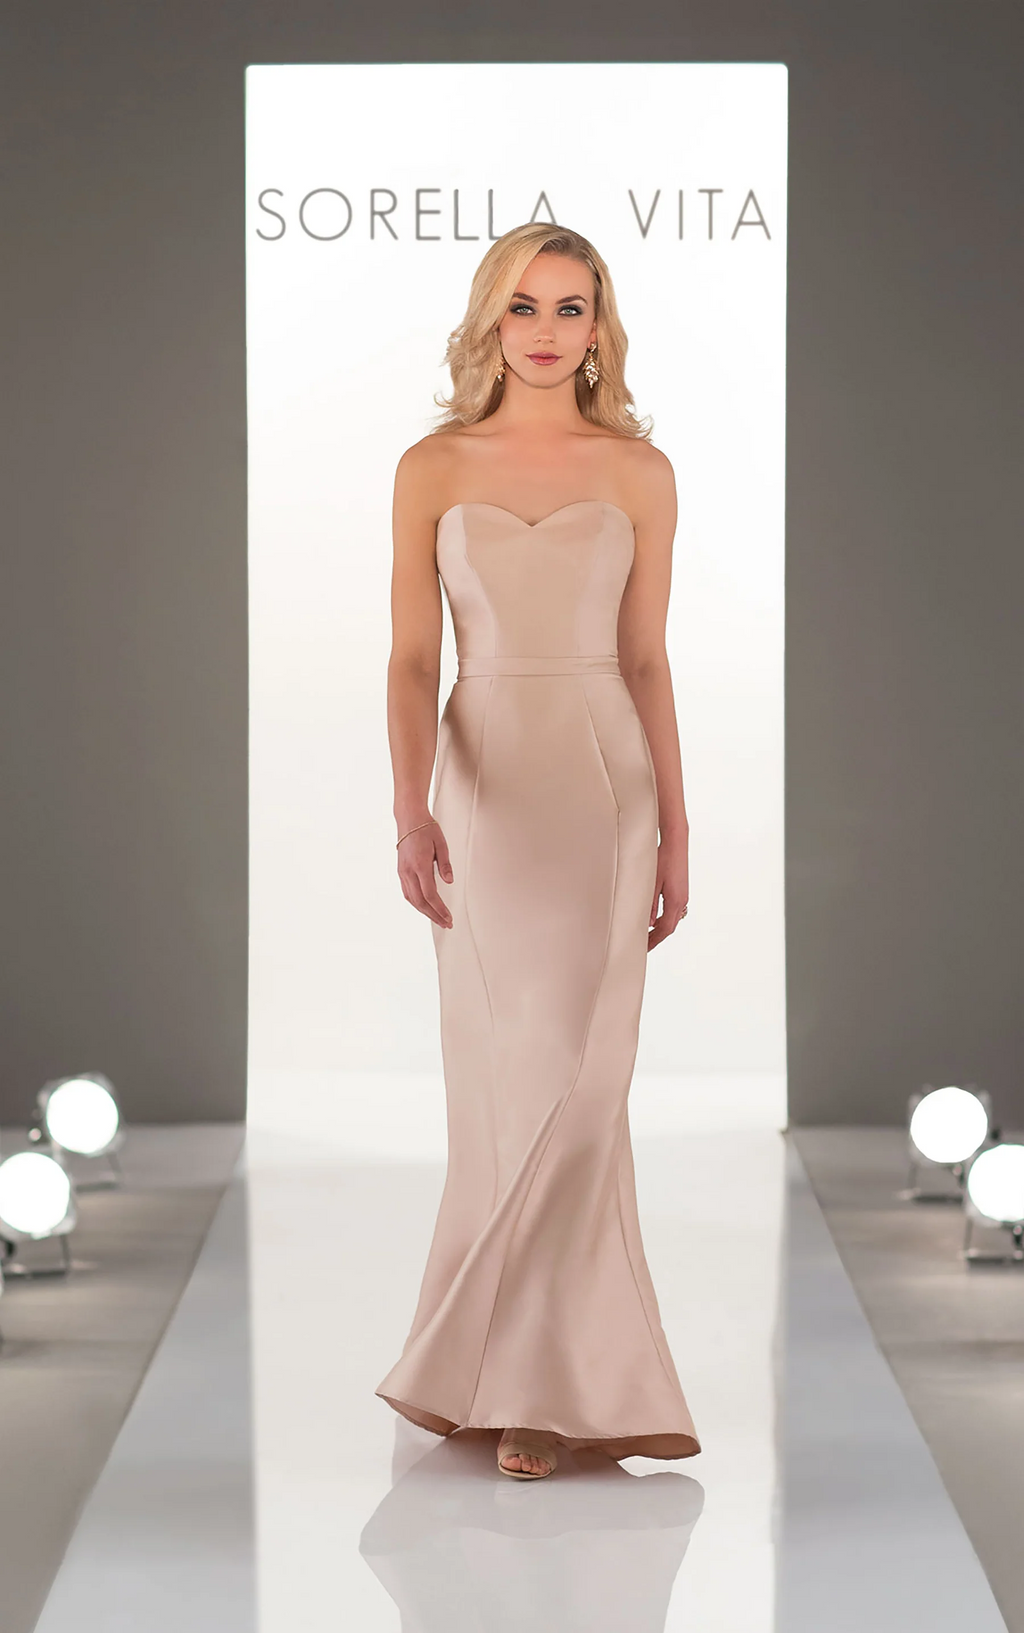 Sorella Vita Dress Style 9058 (Pink Champagne-Size 12) Prom, Ball., Black-tie, Bridesmaid, Pageant